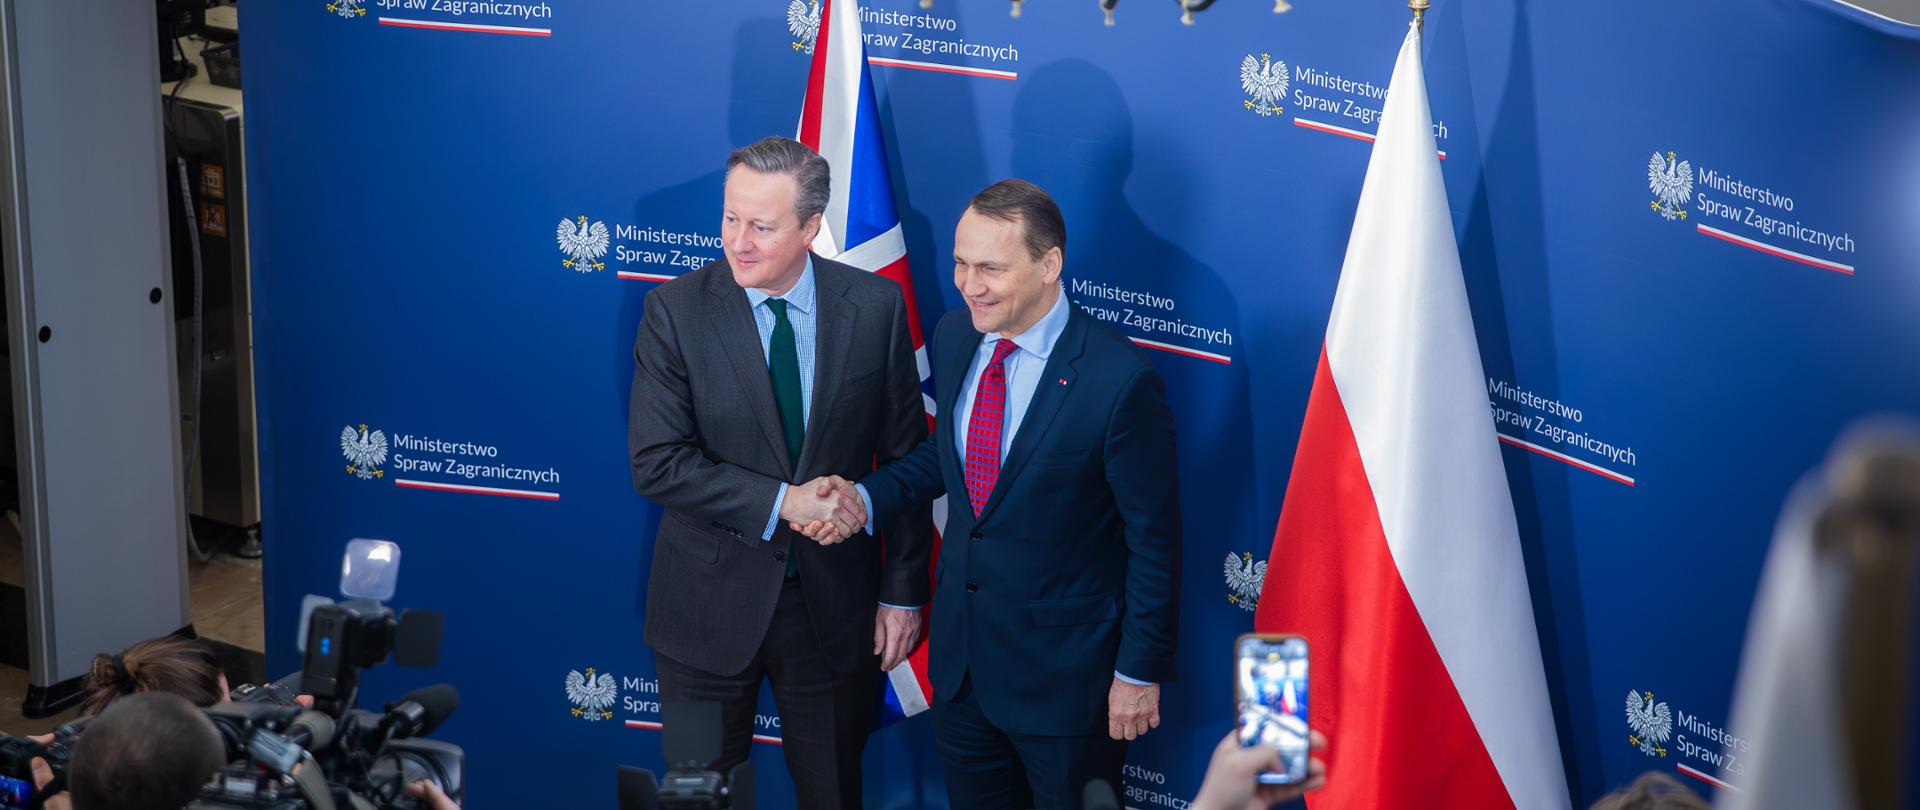 Minister Radosław Sikorski met his British counterpart David Cameron in Warsaw